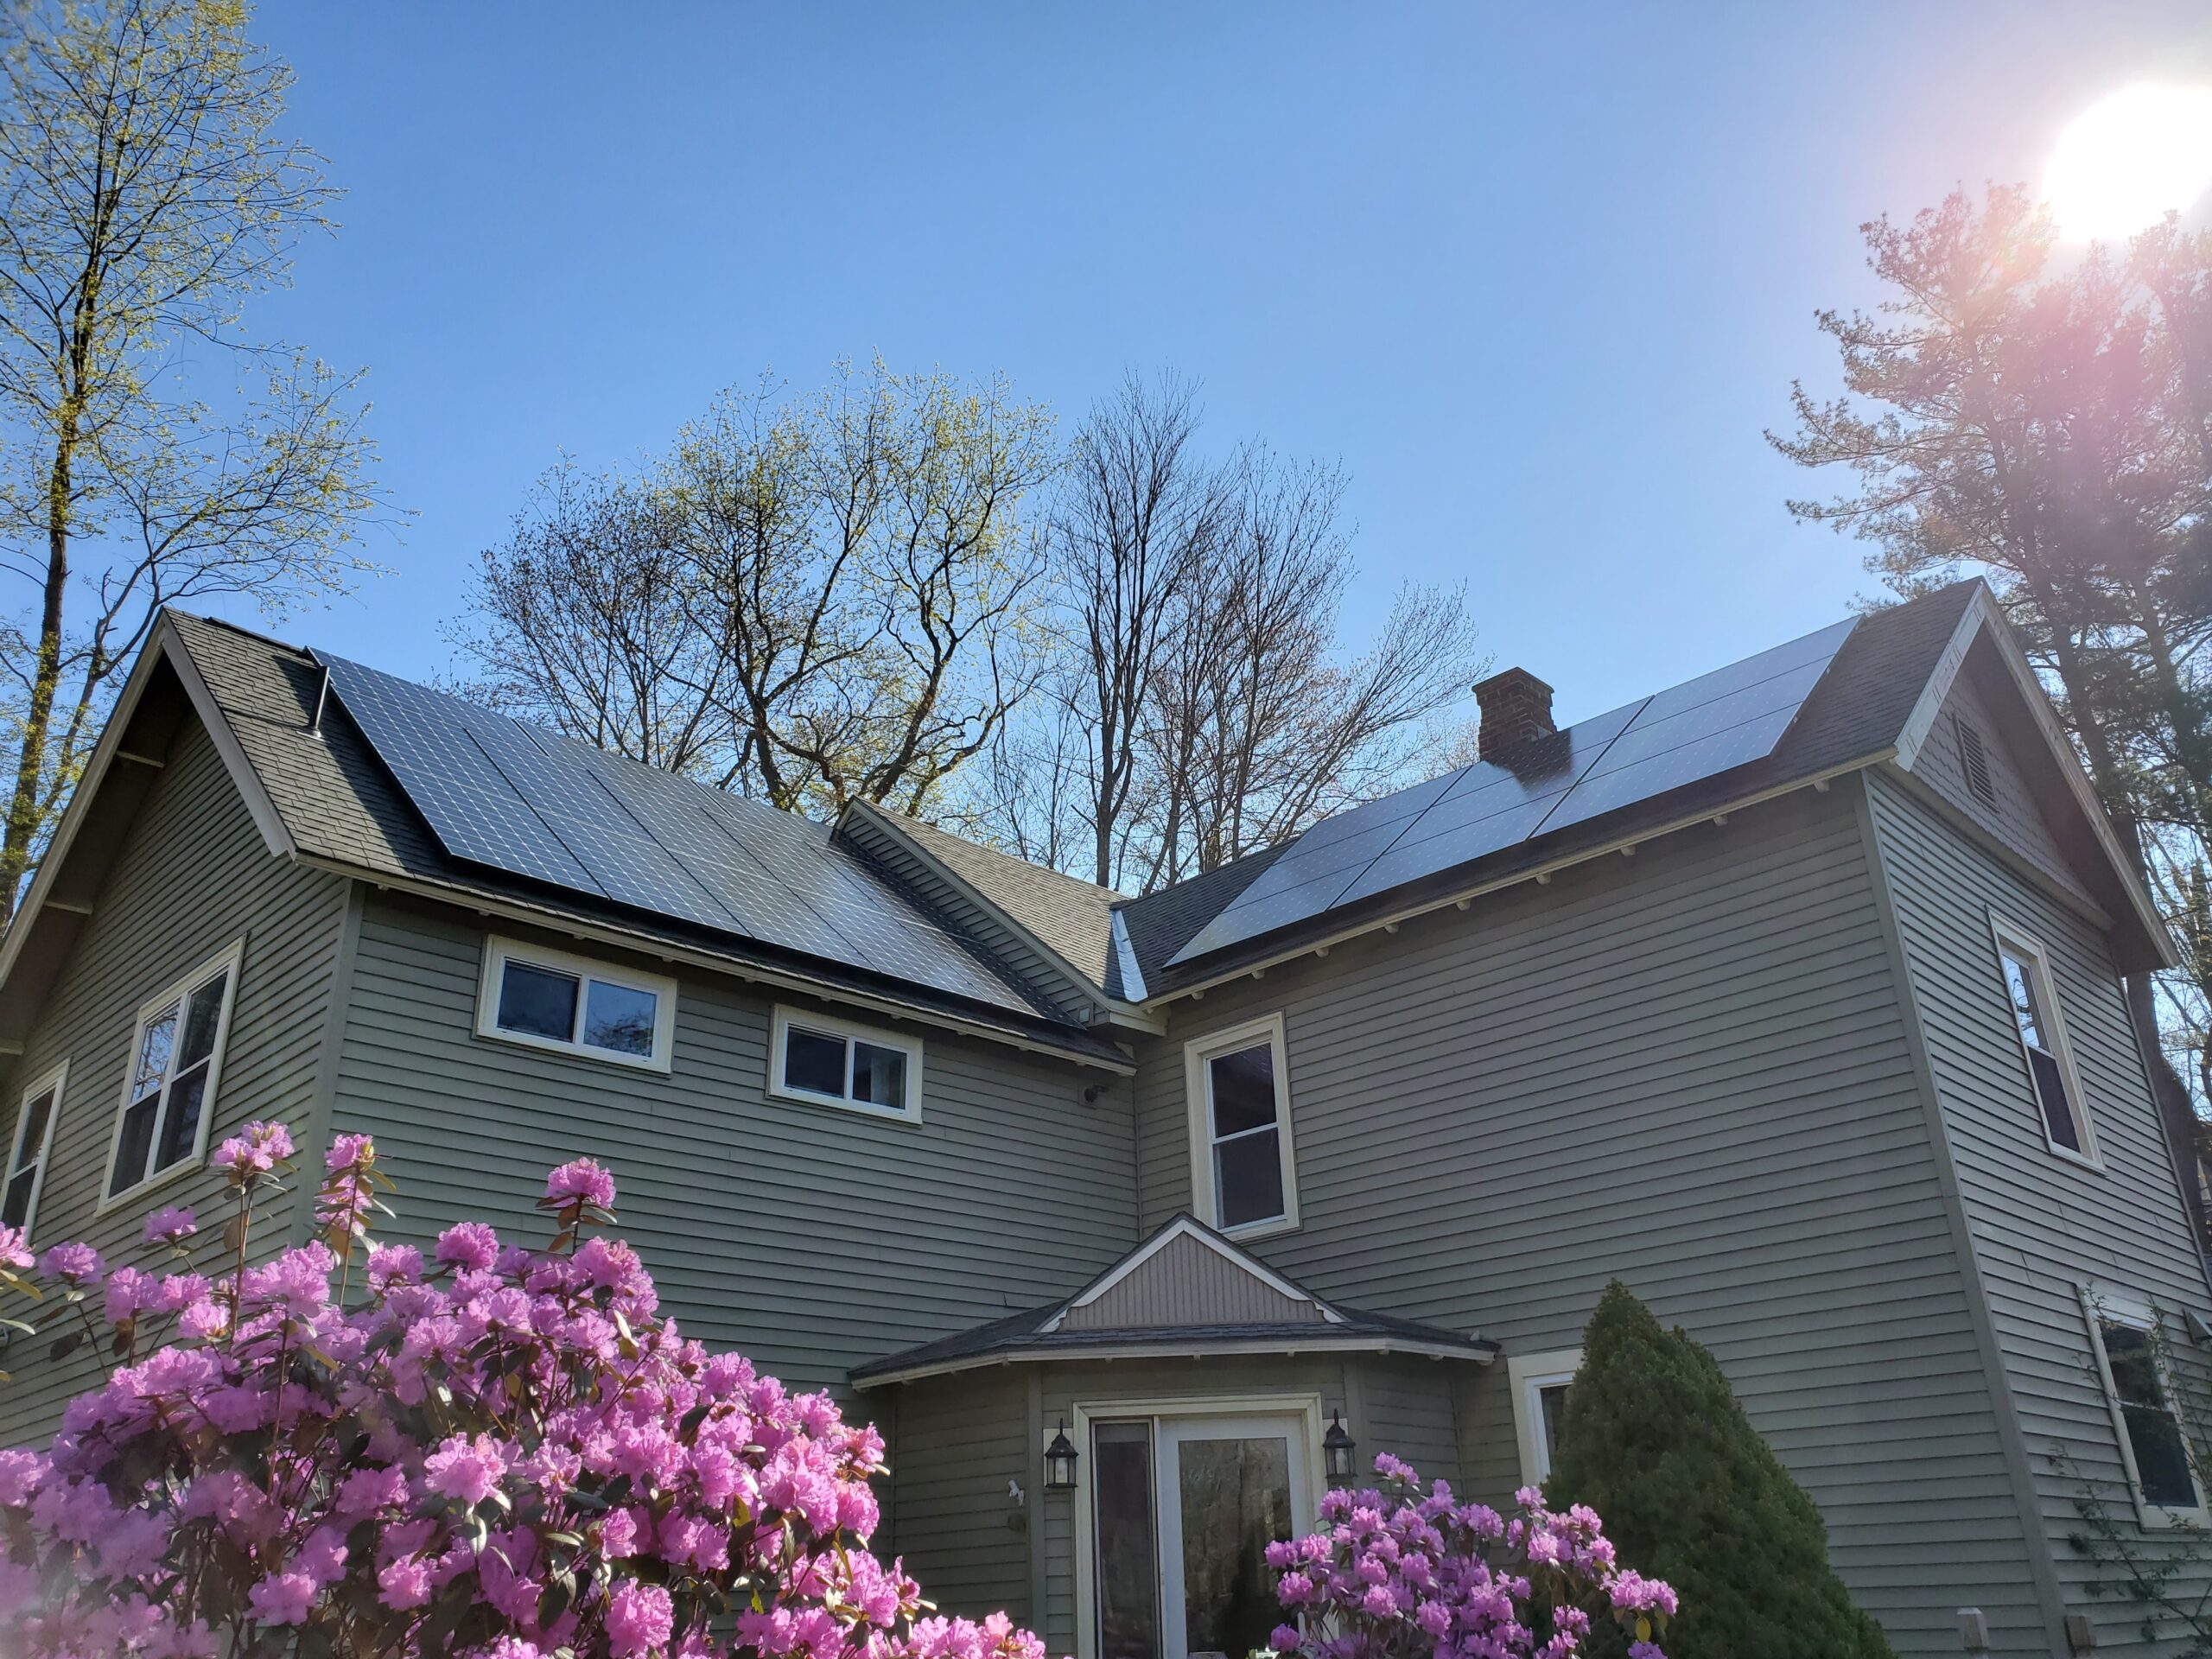 Massachusetts solar incentives for your solar panels